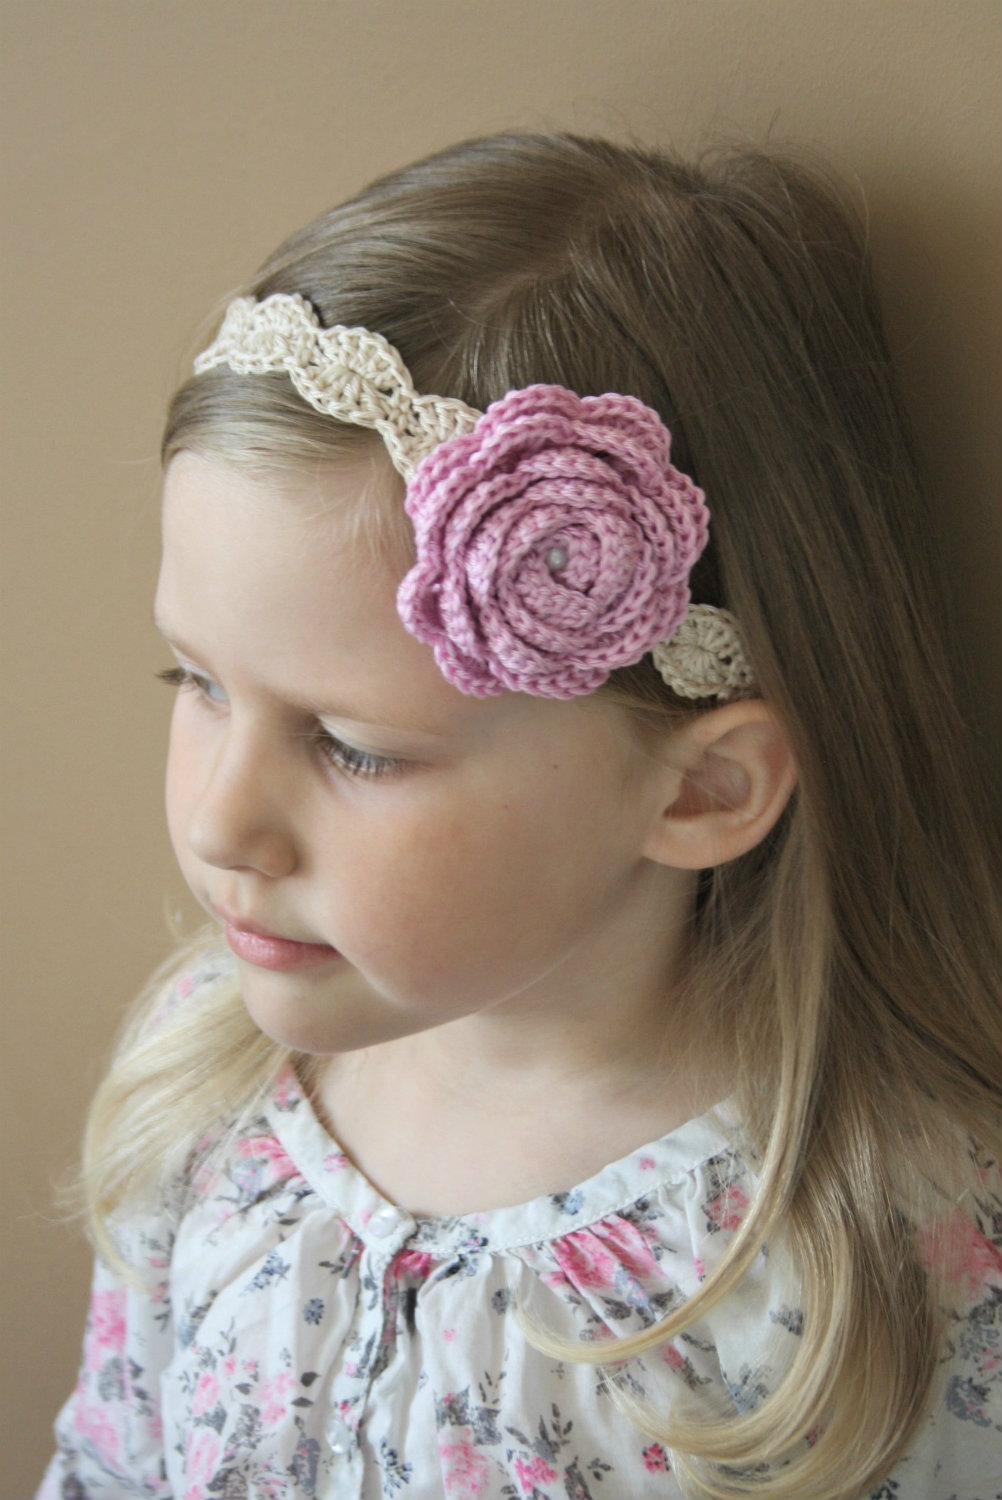 Crochet headband pattern | DIY headband with a huge rose | lilleliis